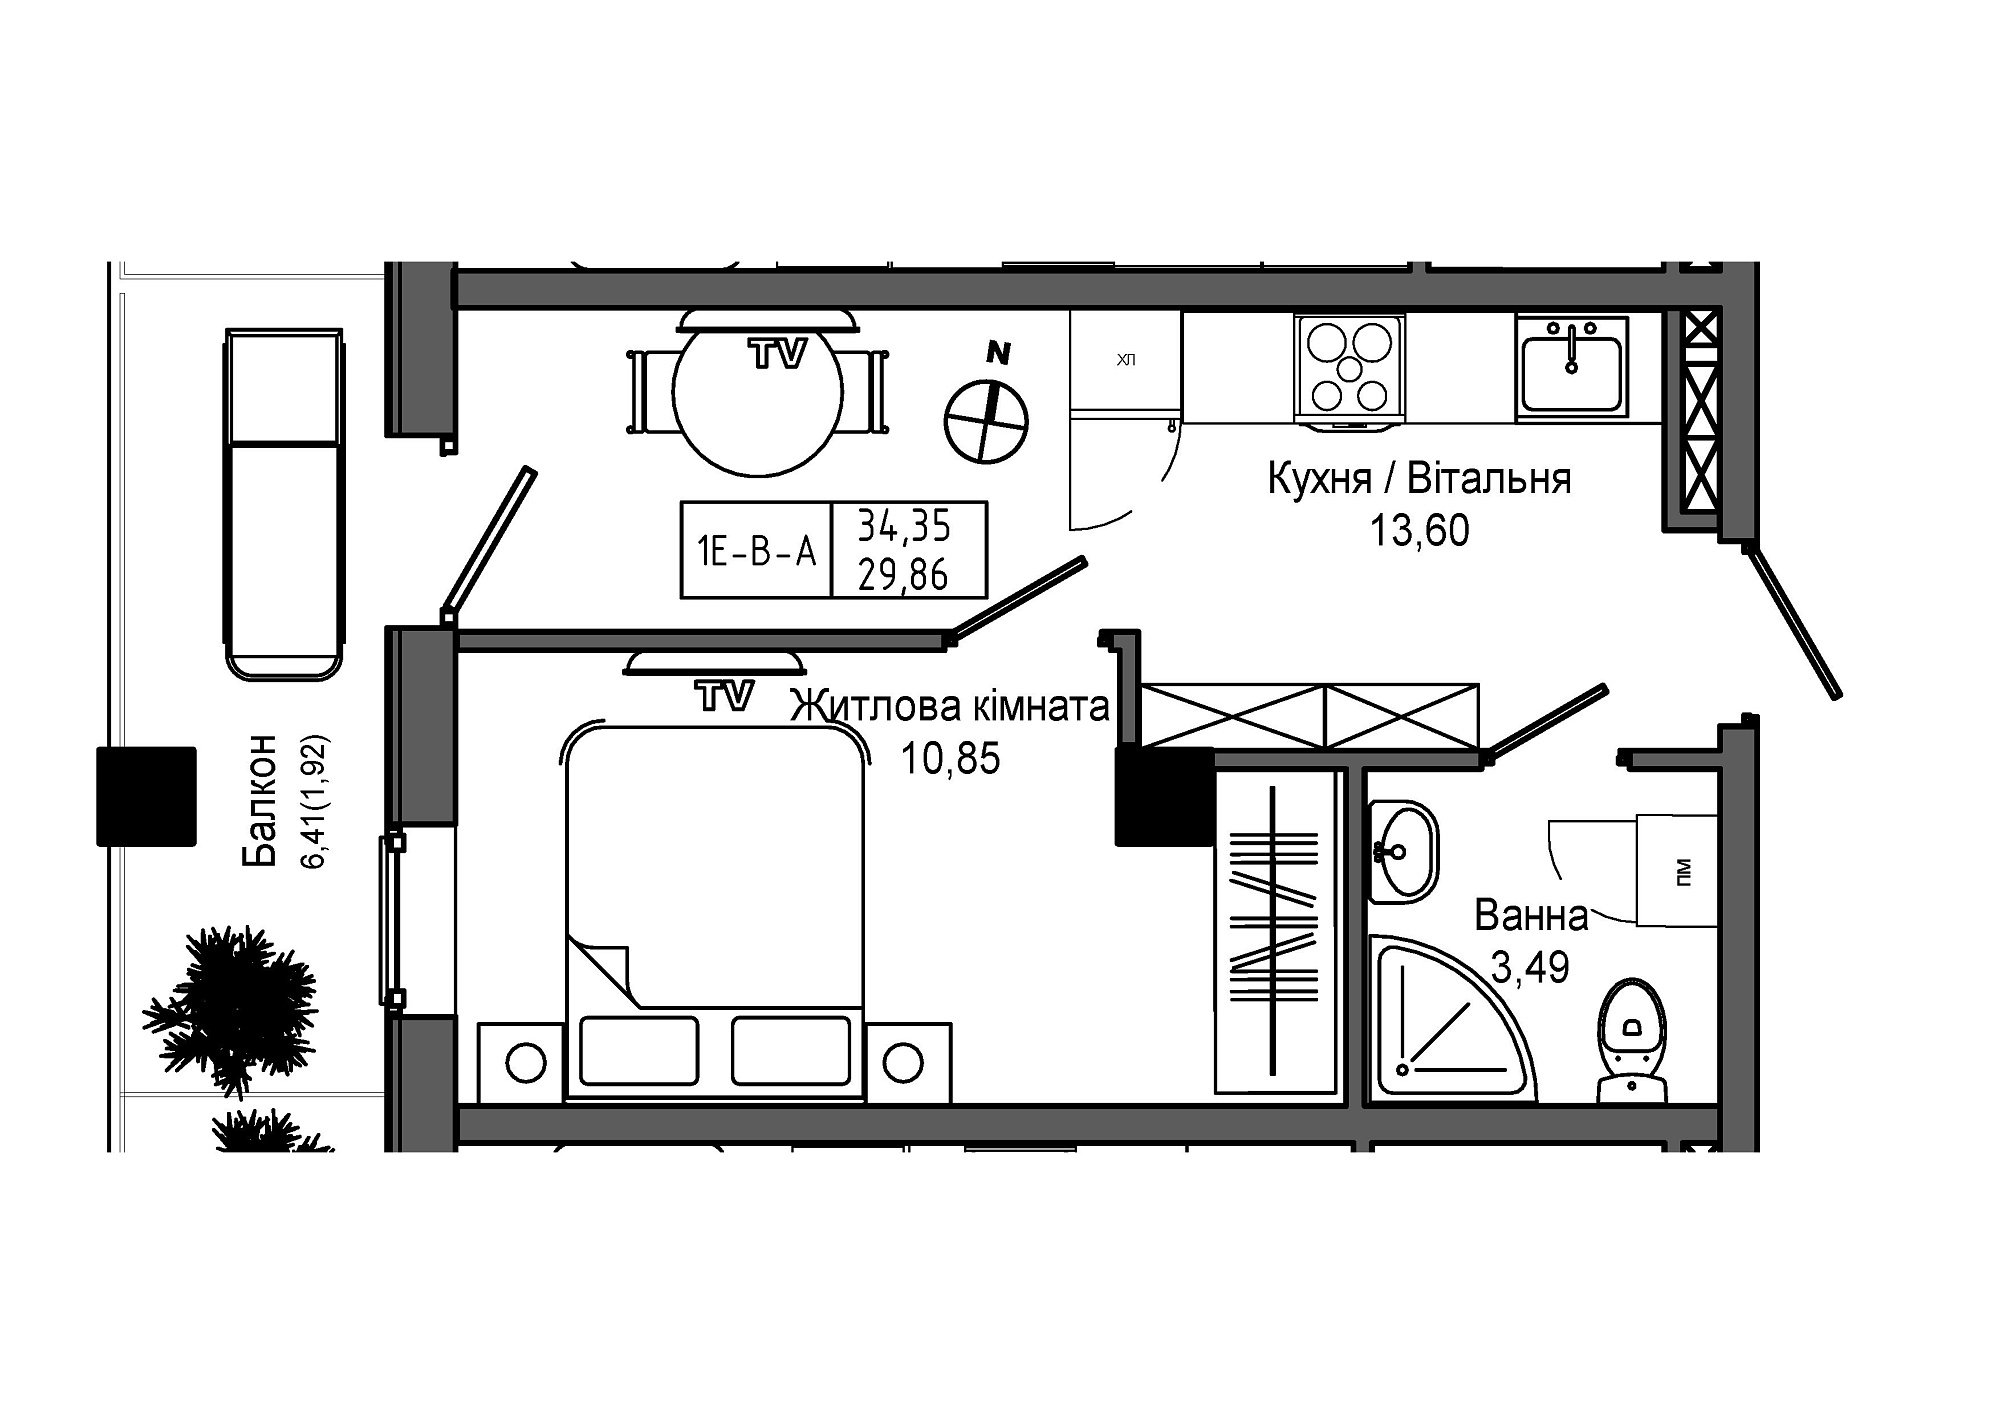 Планування 1-к квартира площею 29.86м2, UM-006-02/0014.